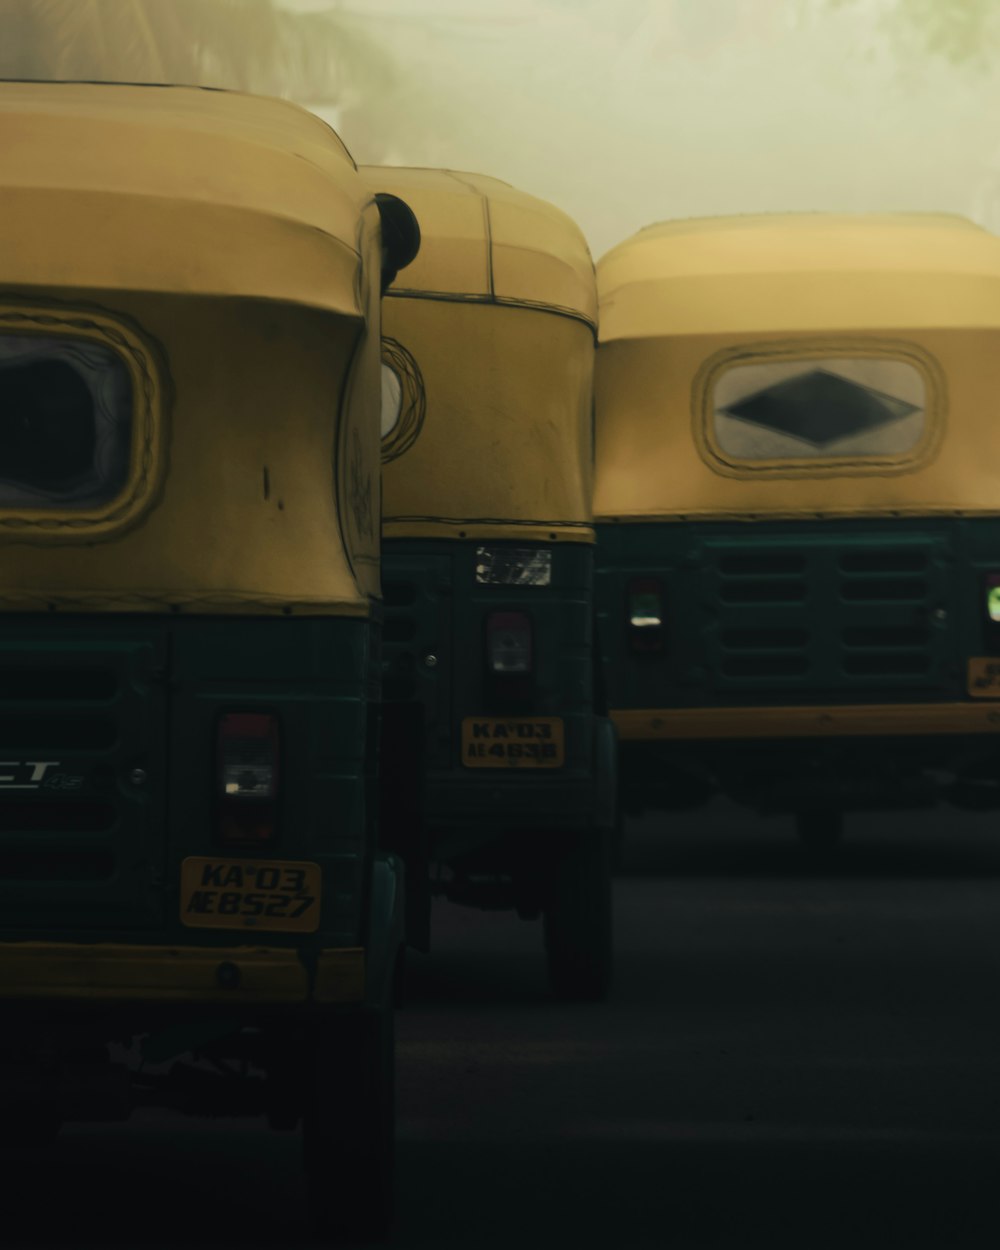 three yellow auto-rickshaws